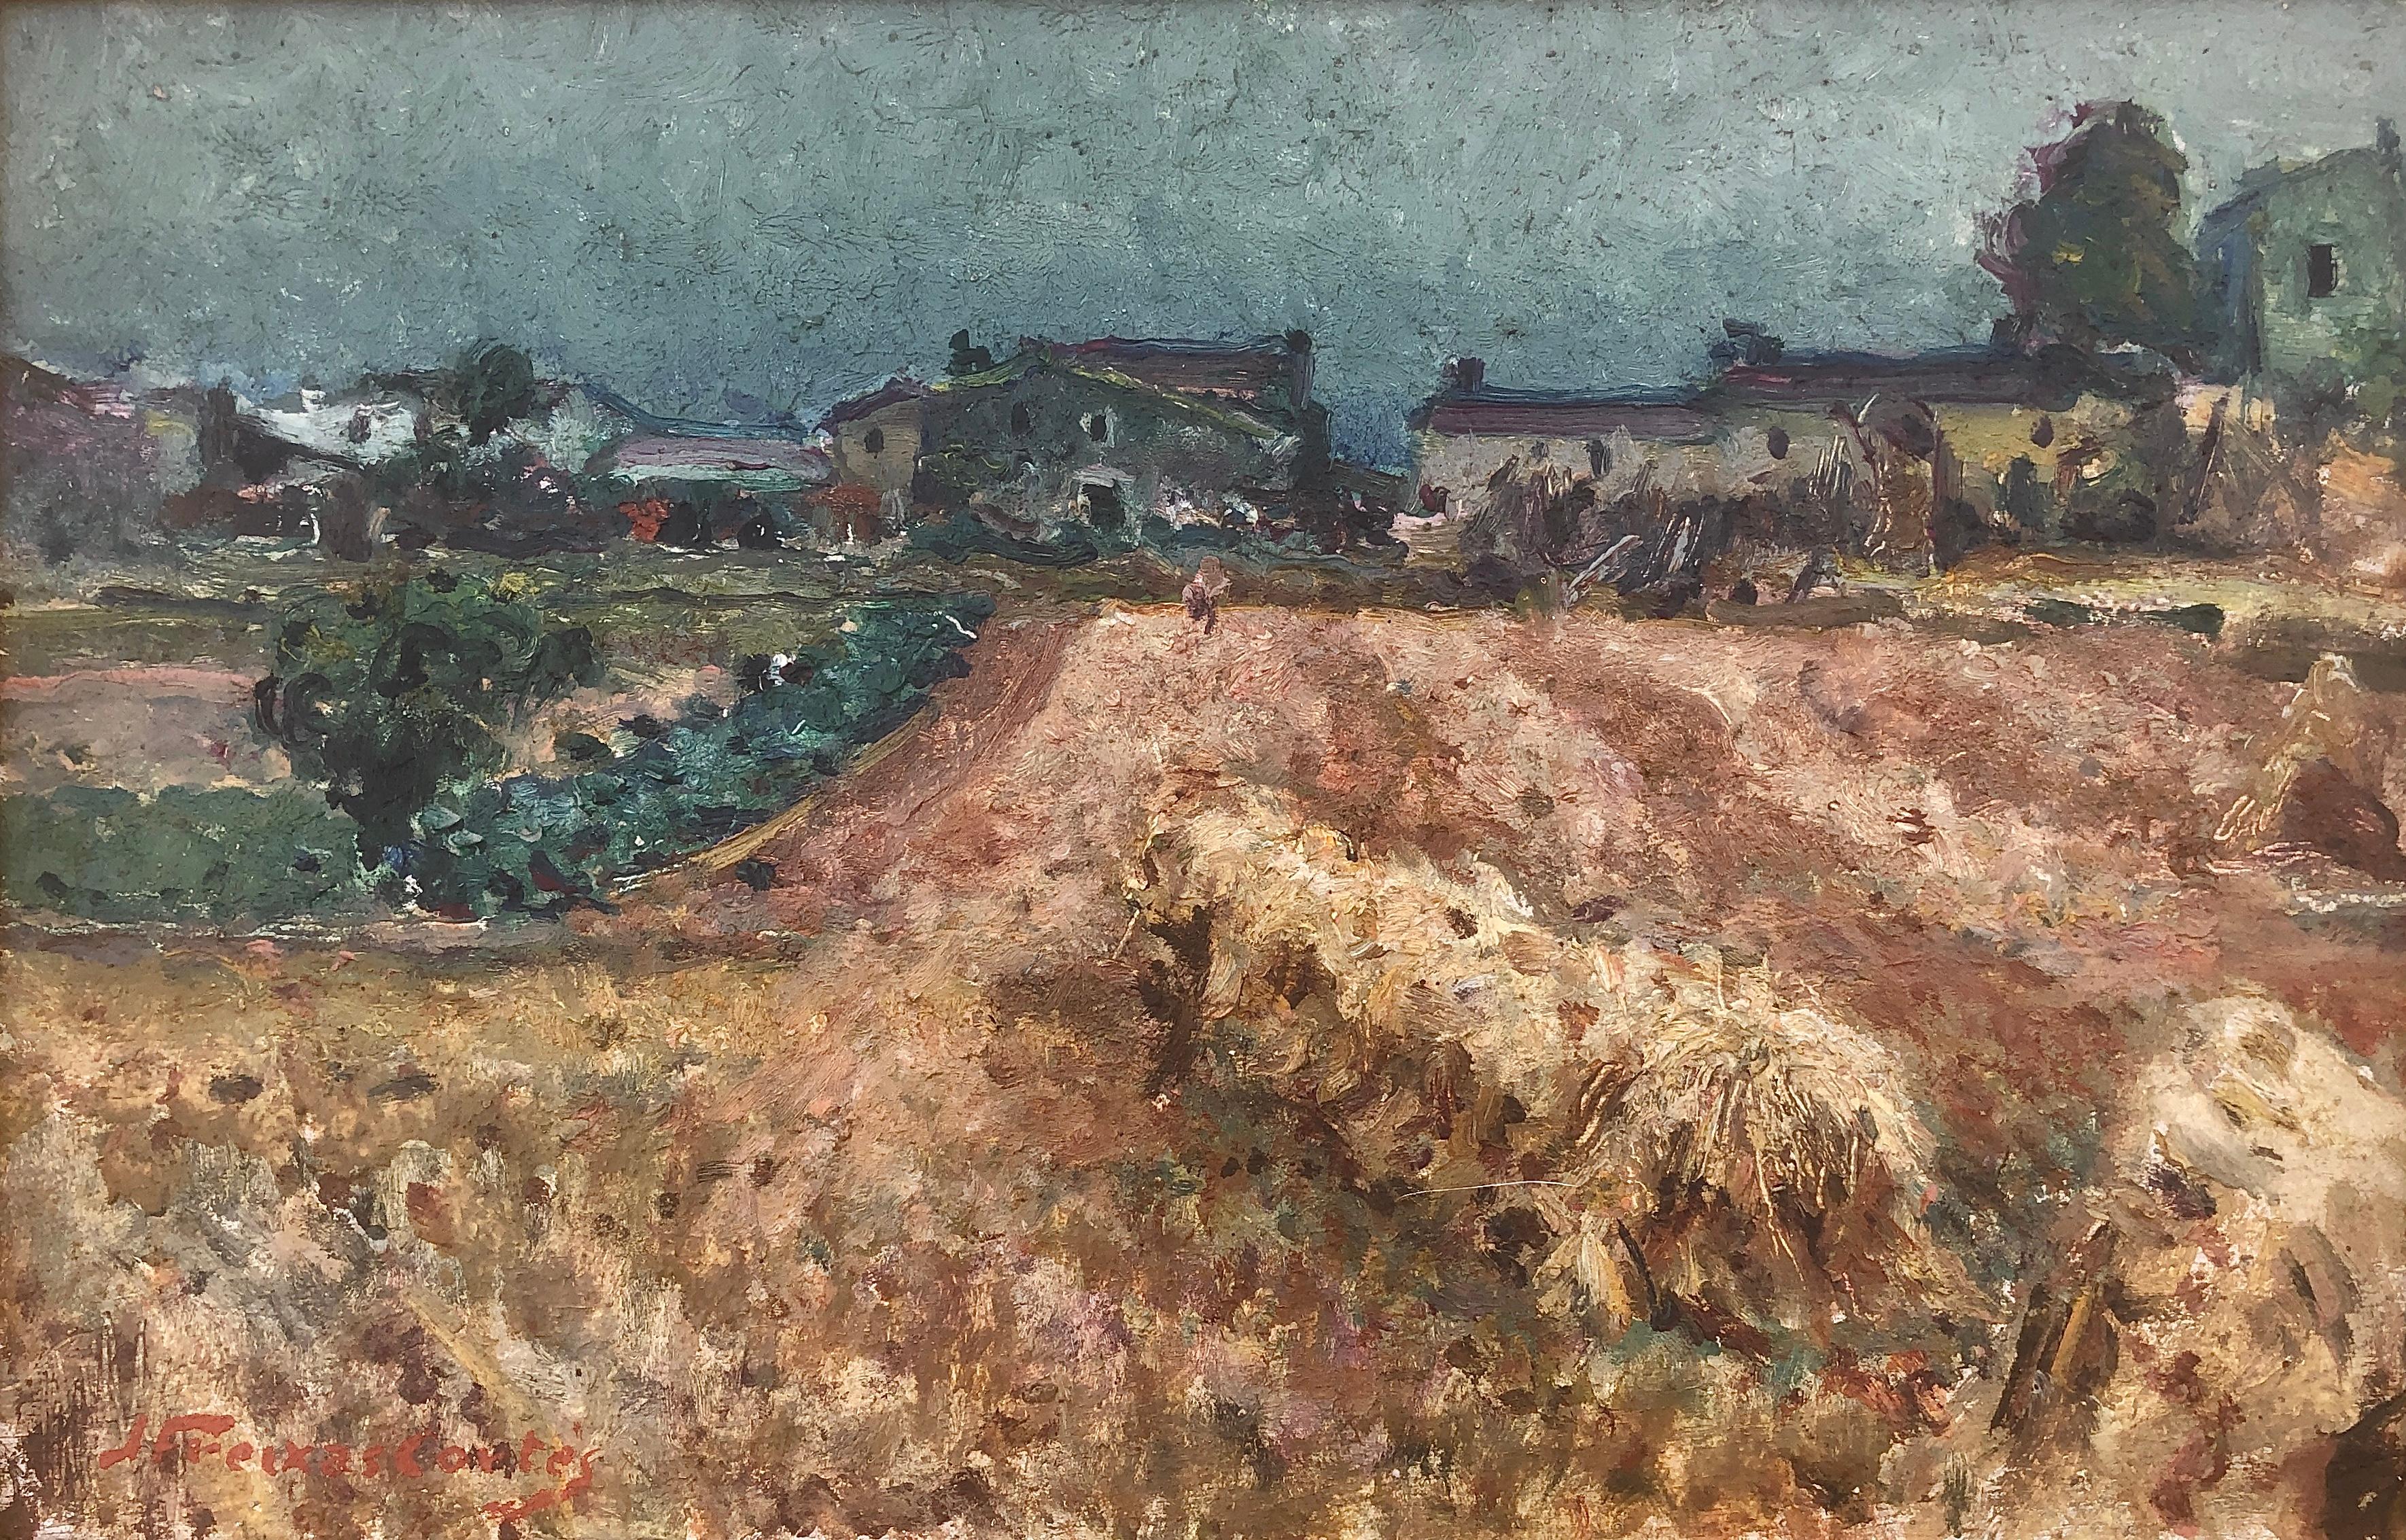 Spanish landscape Spain oil on canvas painting